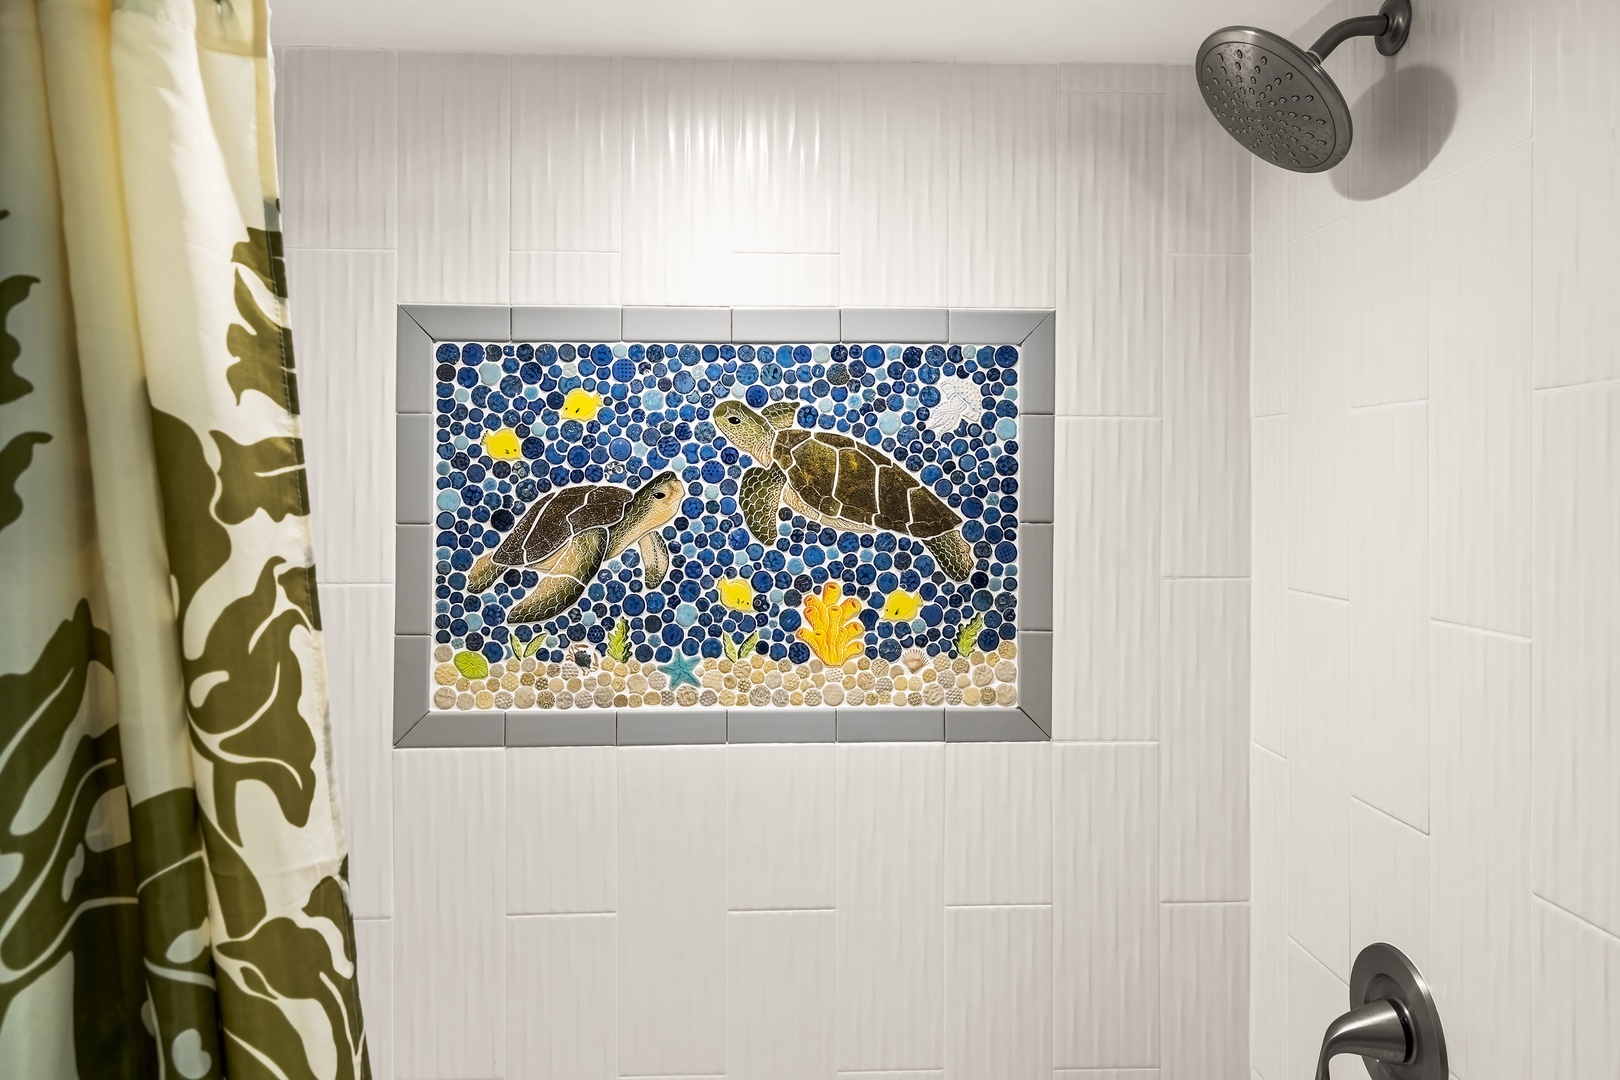 Kailua Kona Vacation Rentals, Kona Pacific B310 - Guest bathroom shower with mosaic tile design